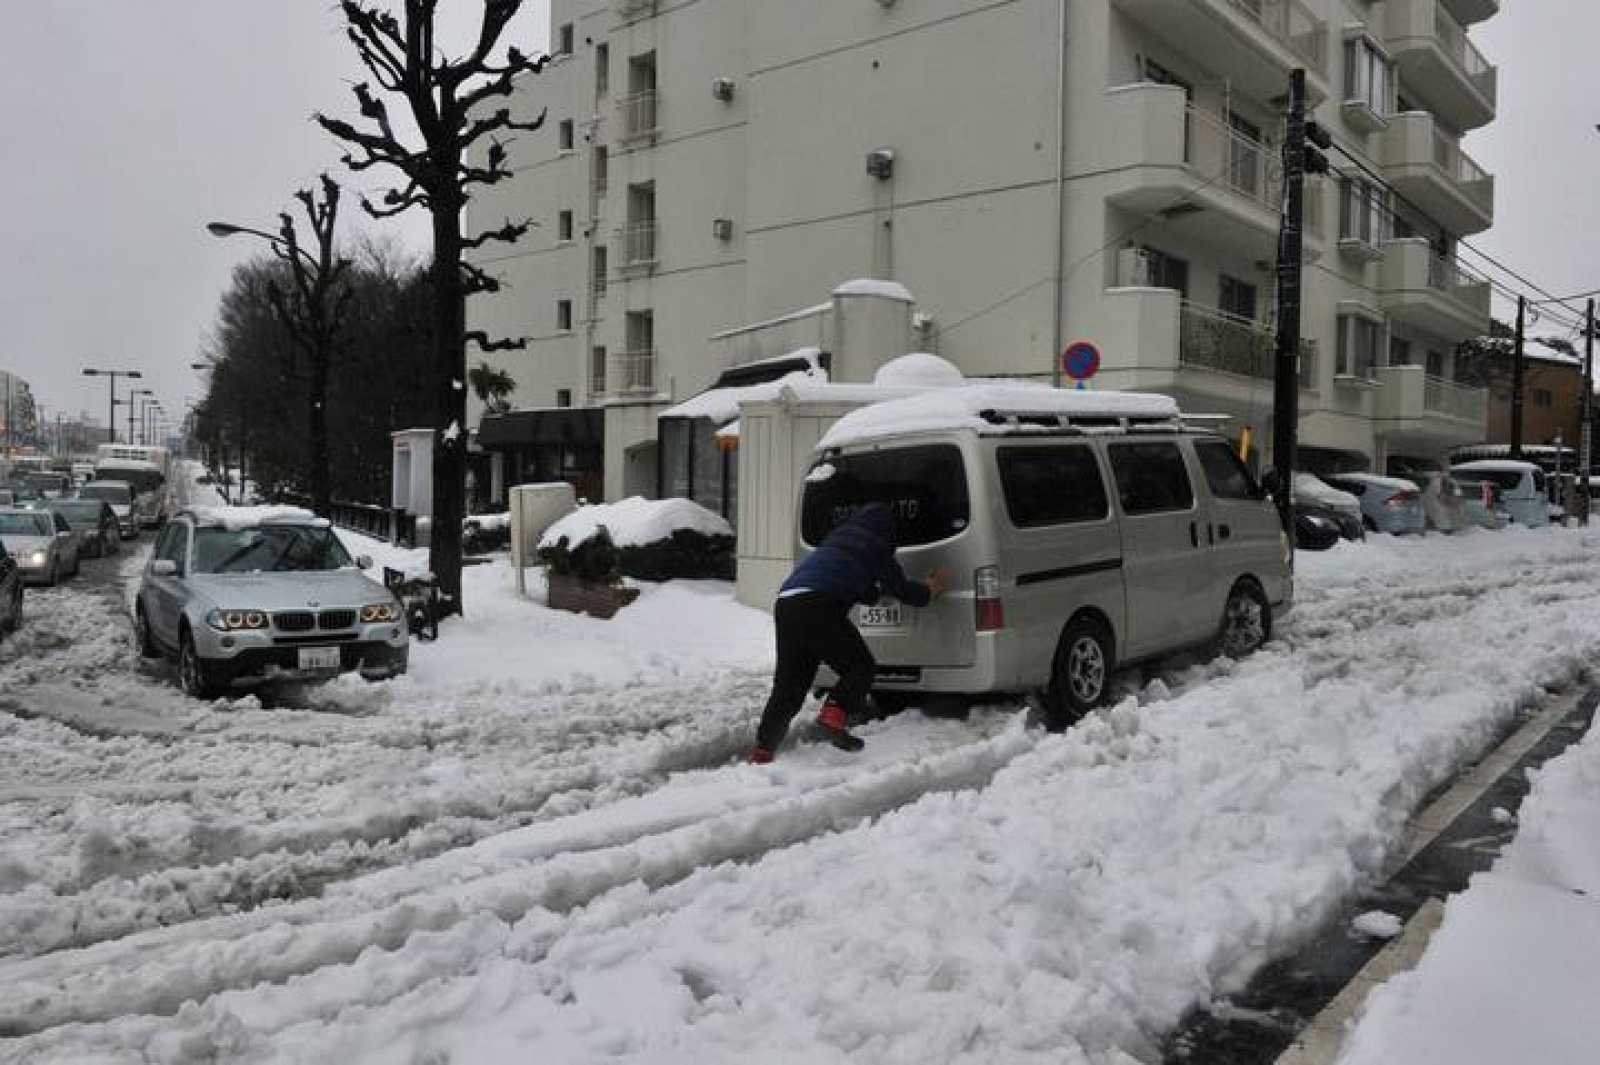 https://www.rtve.es/noticias/20140216/mayor-temporal-nieve-45-anos-deja-12-muertos-japon/879980.shtml